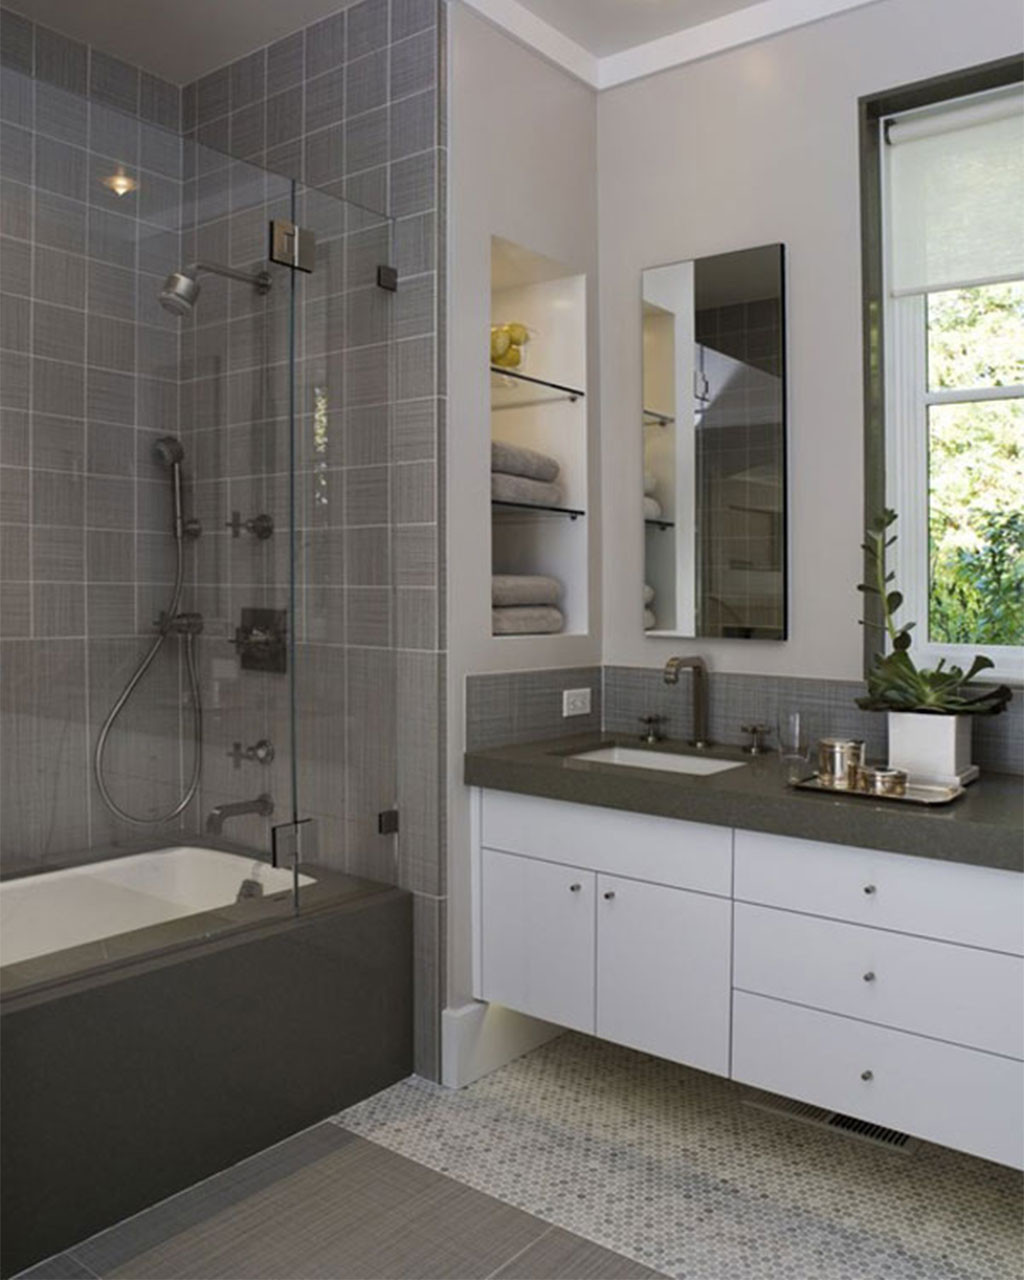 Small Shower Bathroom Ideas
 30 Best Small Bathroom Ideas